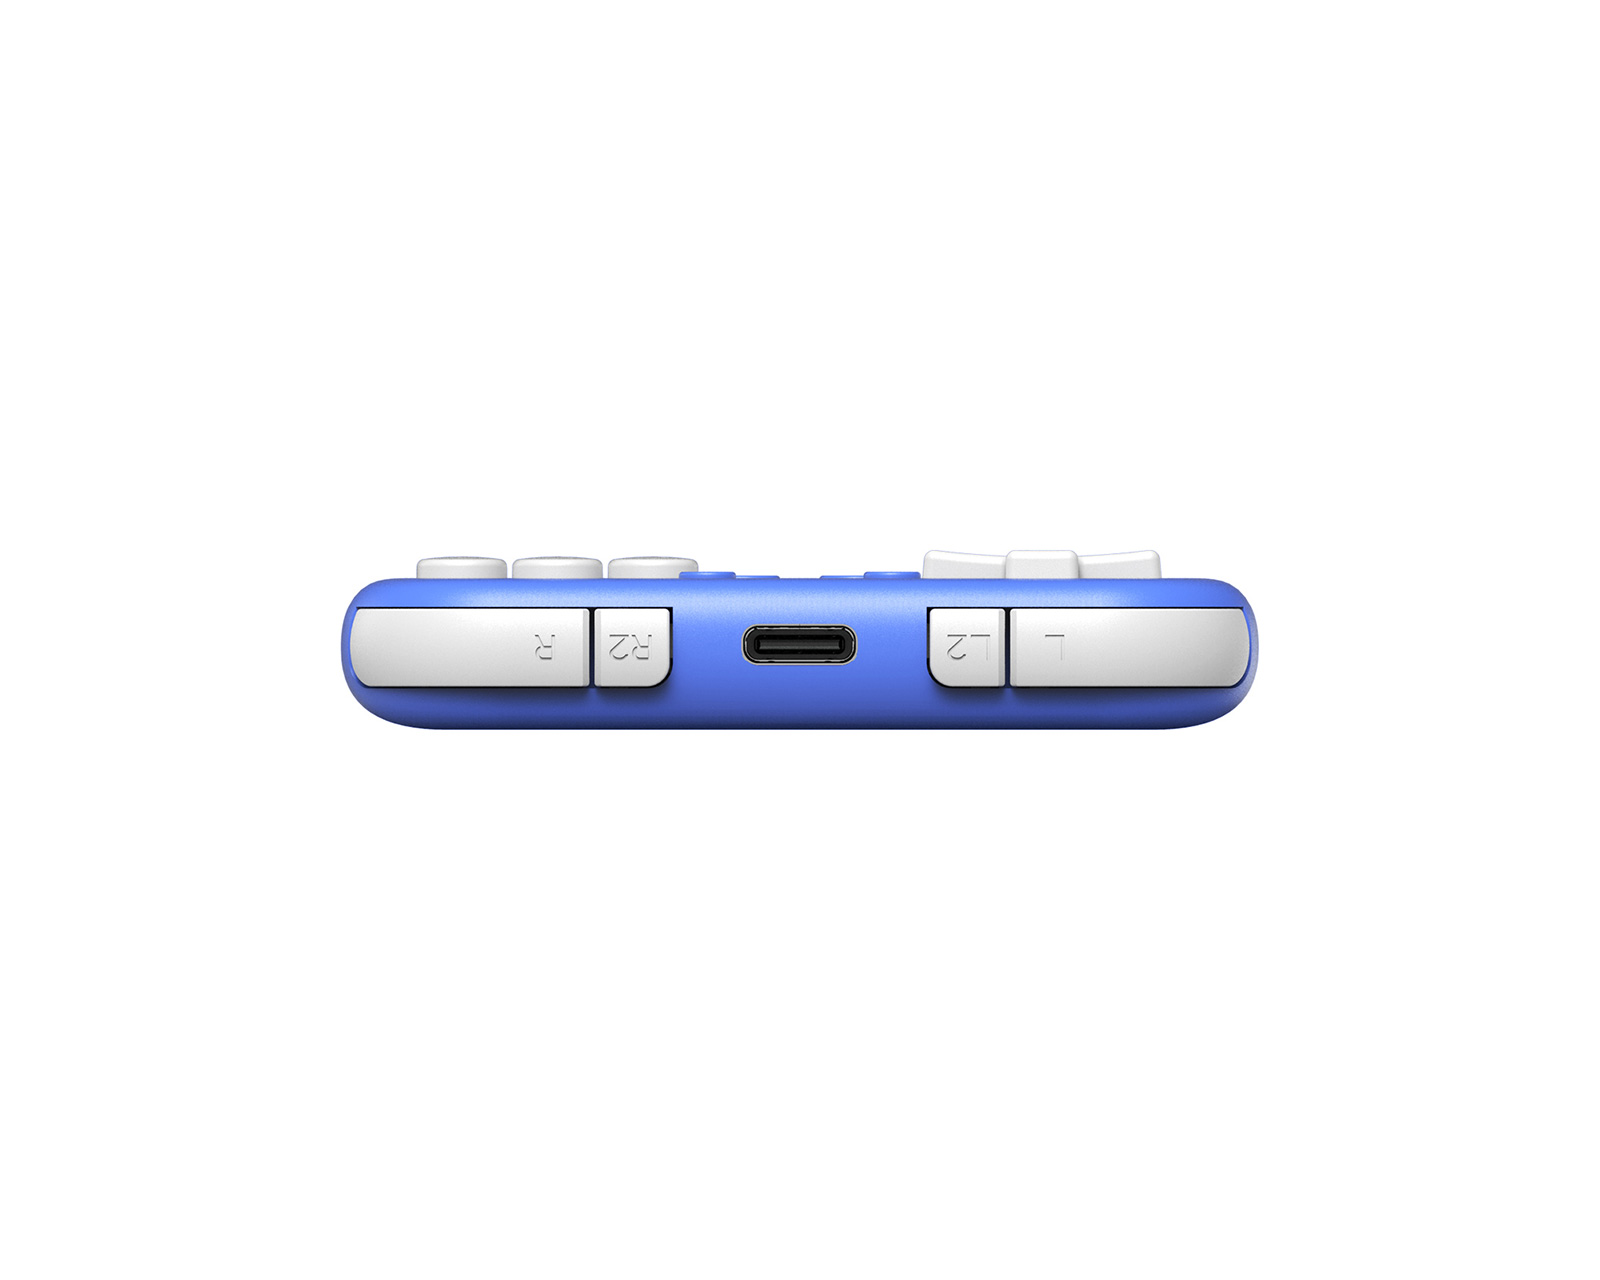 8Bitdo Micro Bluetooth Gamepad - Blue